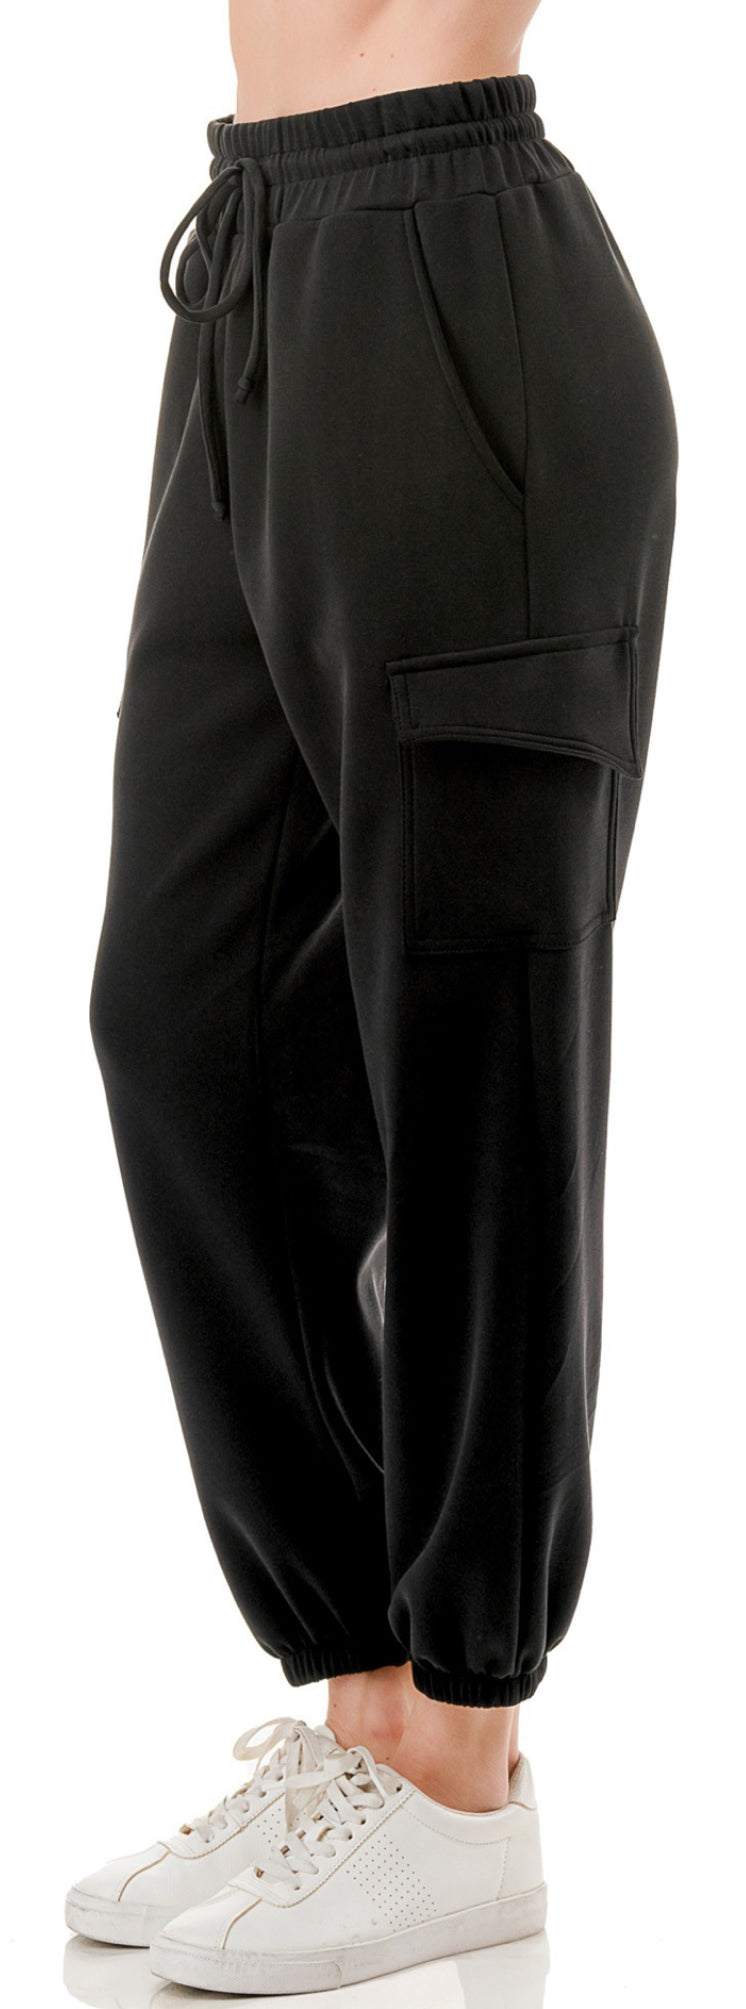 Super soft black cargo sweats & elbow sleeve tie bottom tee (sold separately)